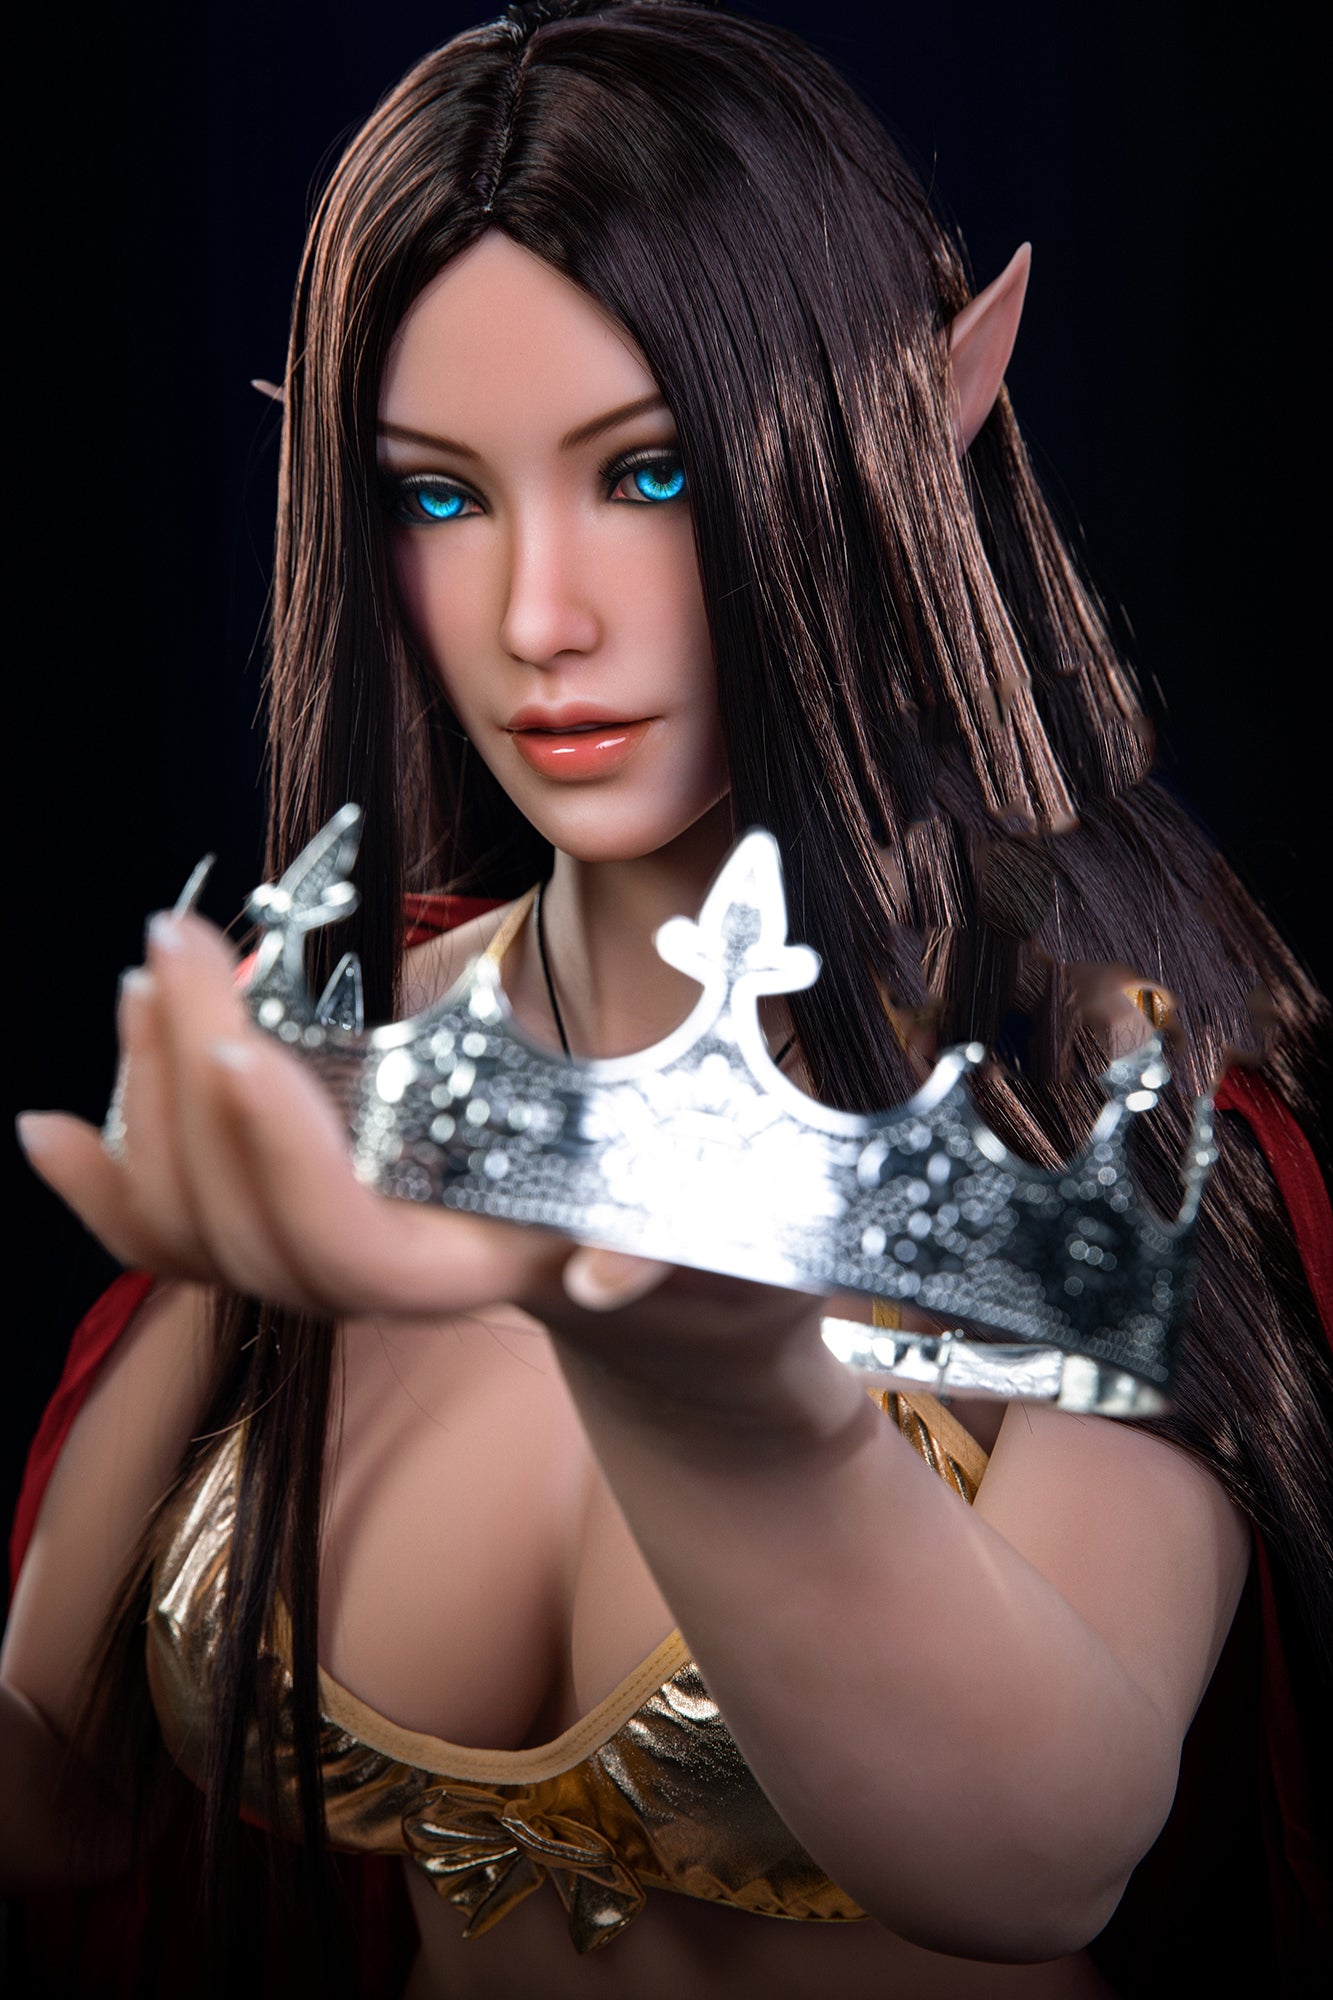 Sex Doll Adoptez “la Reine elfe Earwen” !  donne la couronne